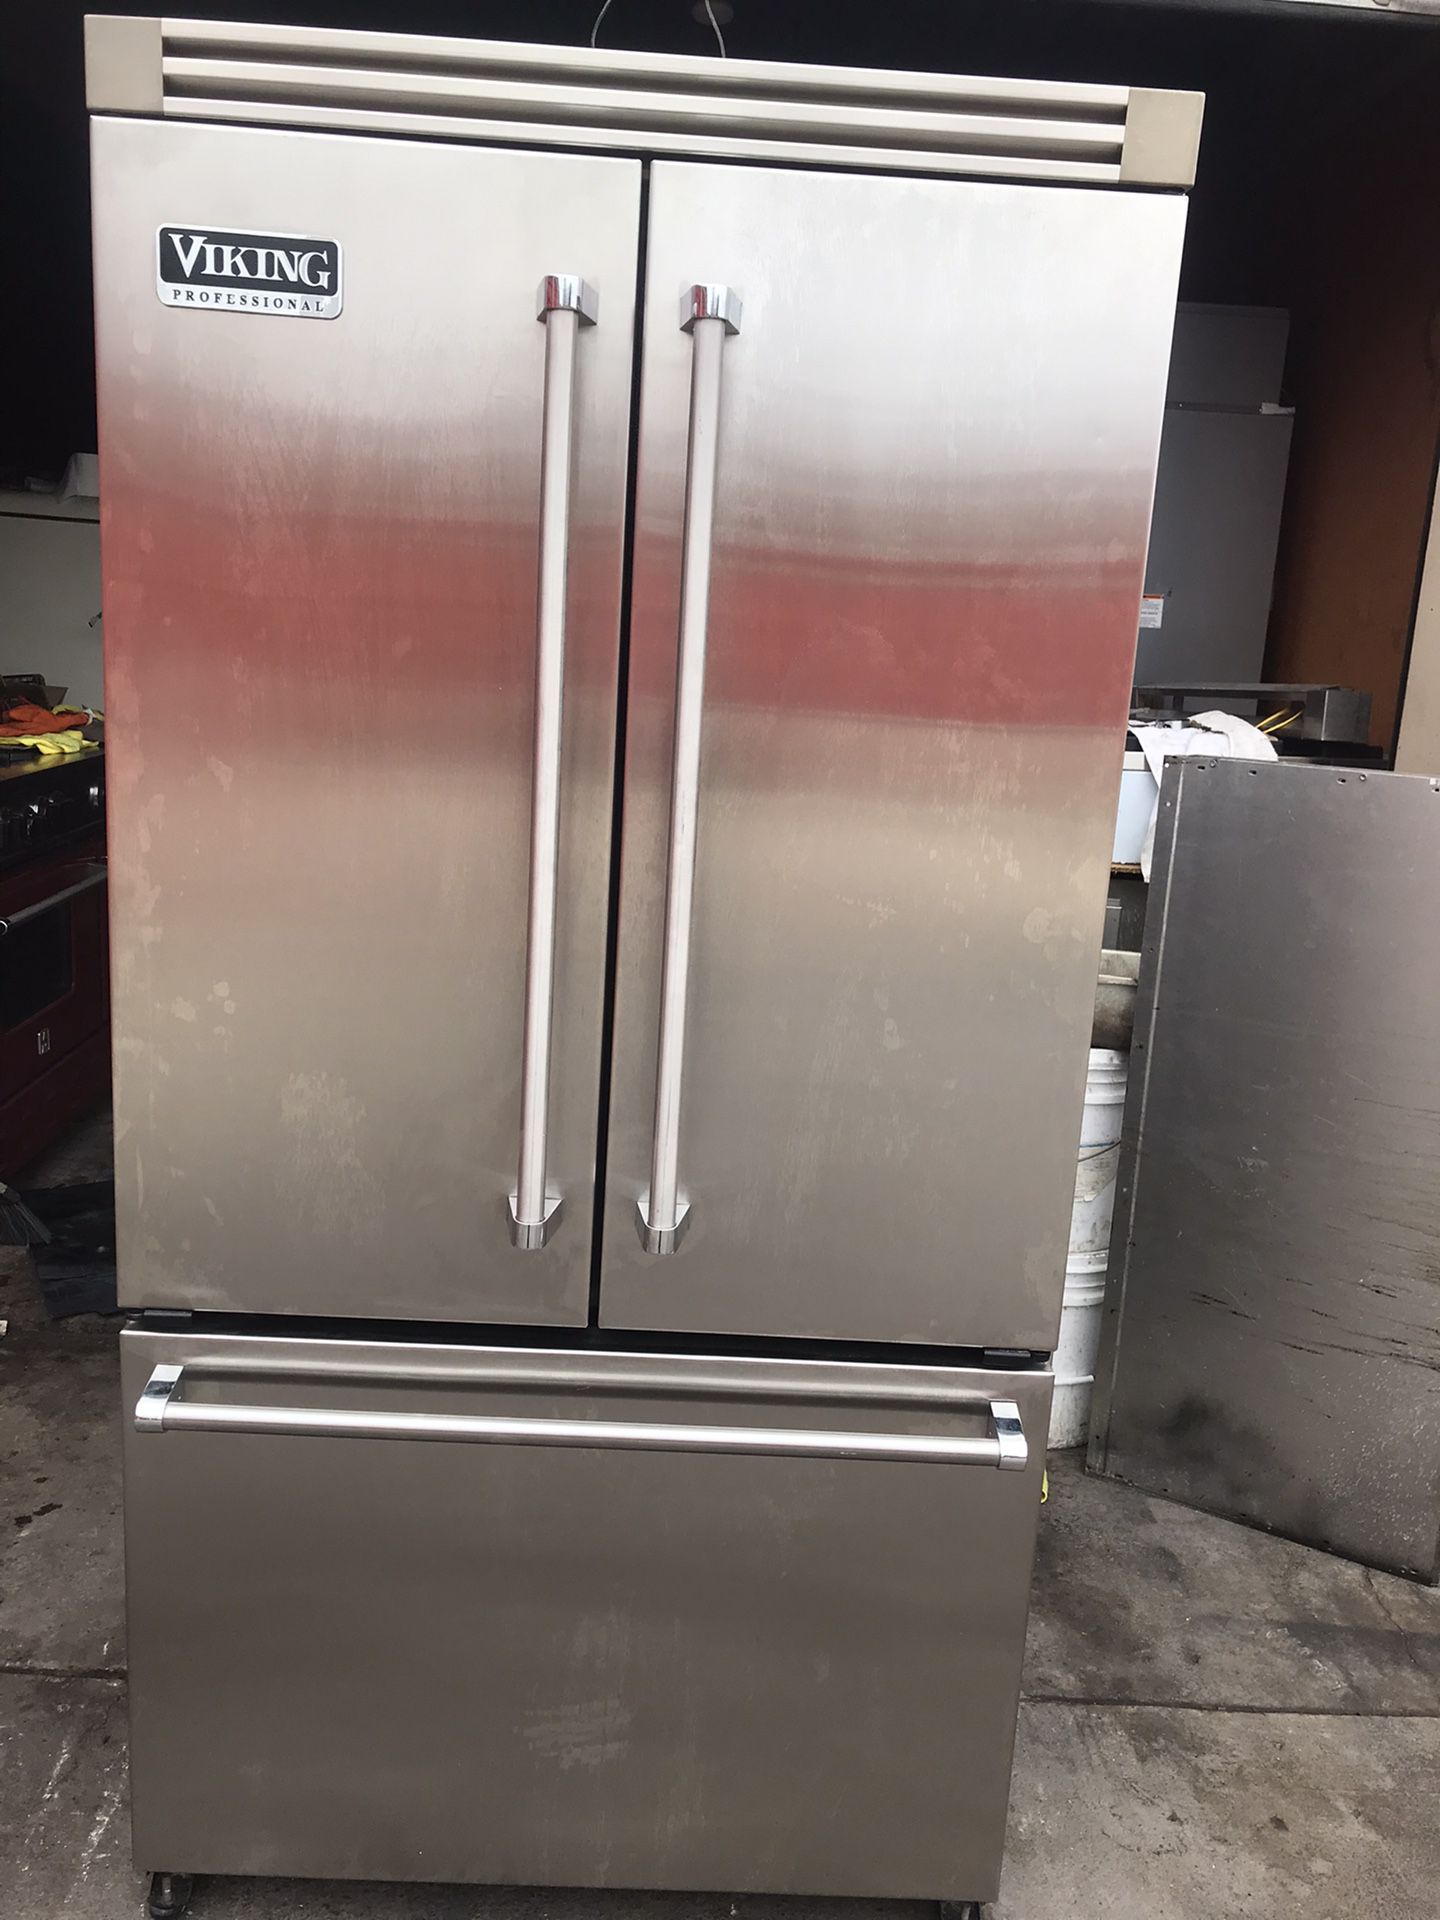 Viking Professional Refrigerator 36”